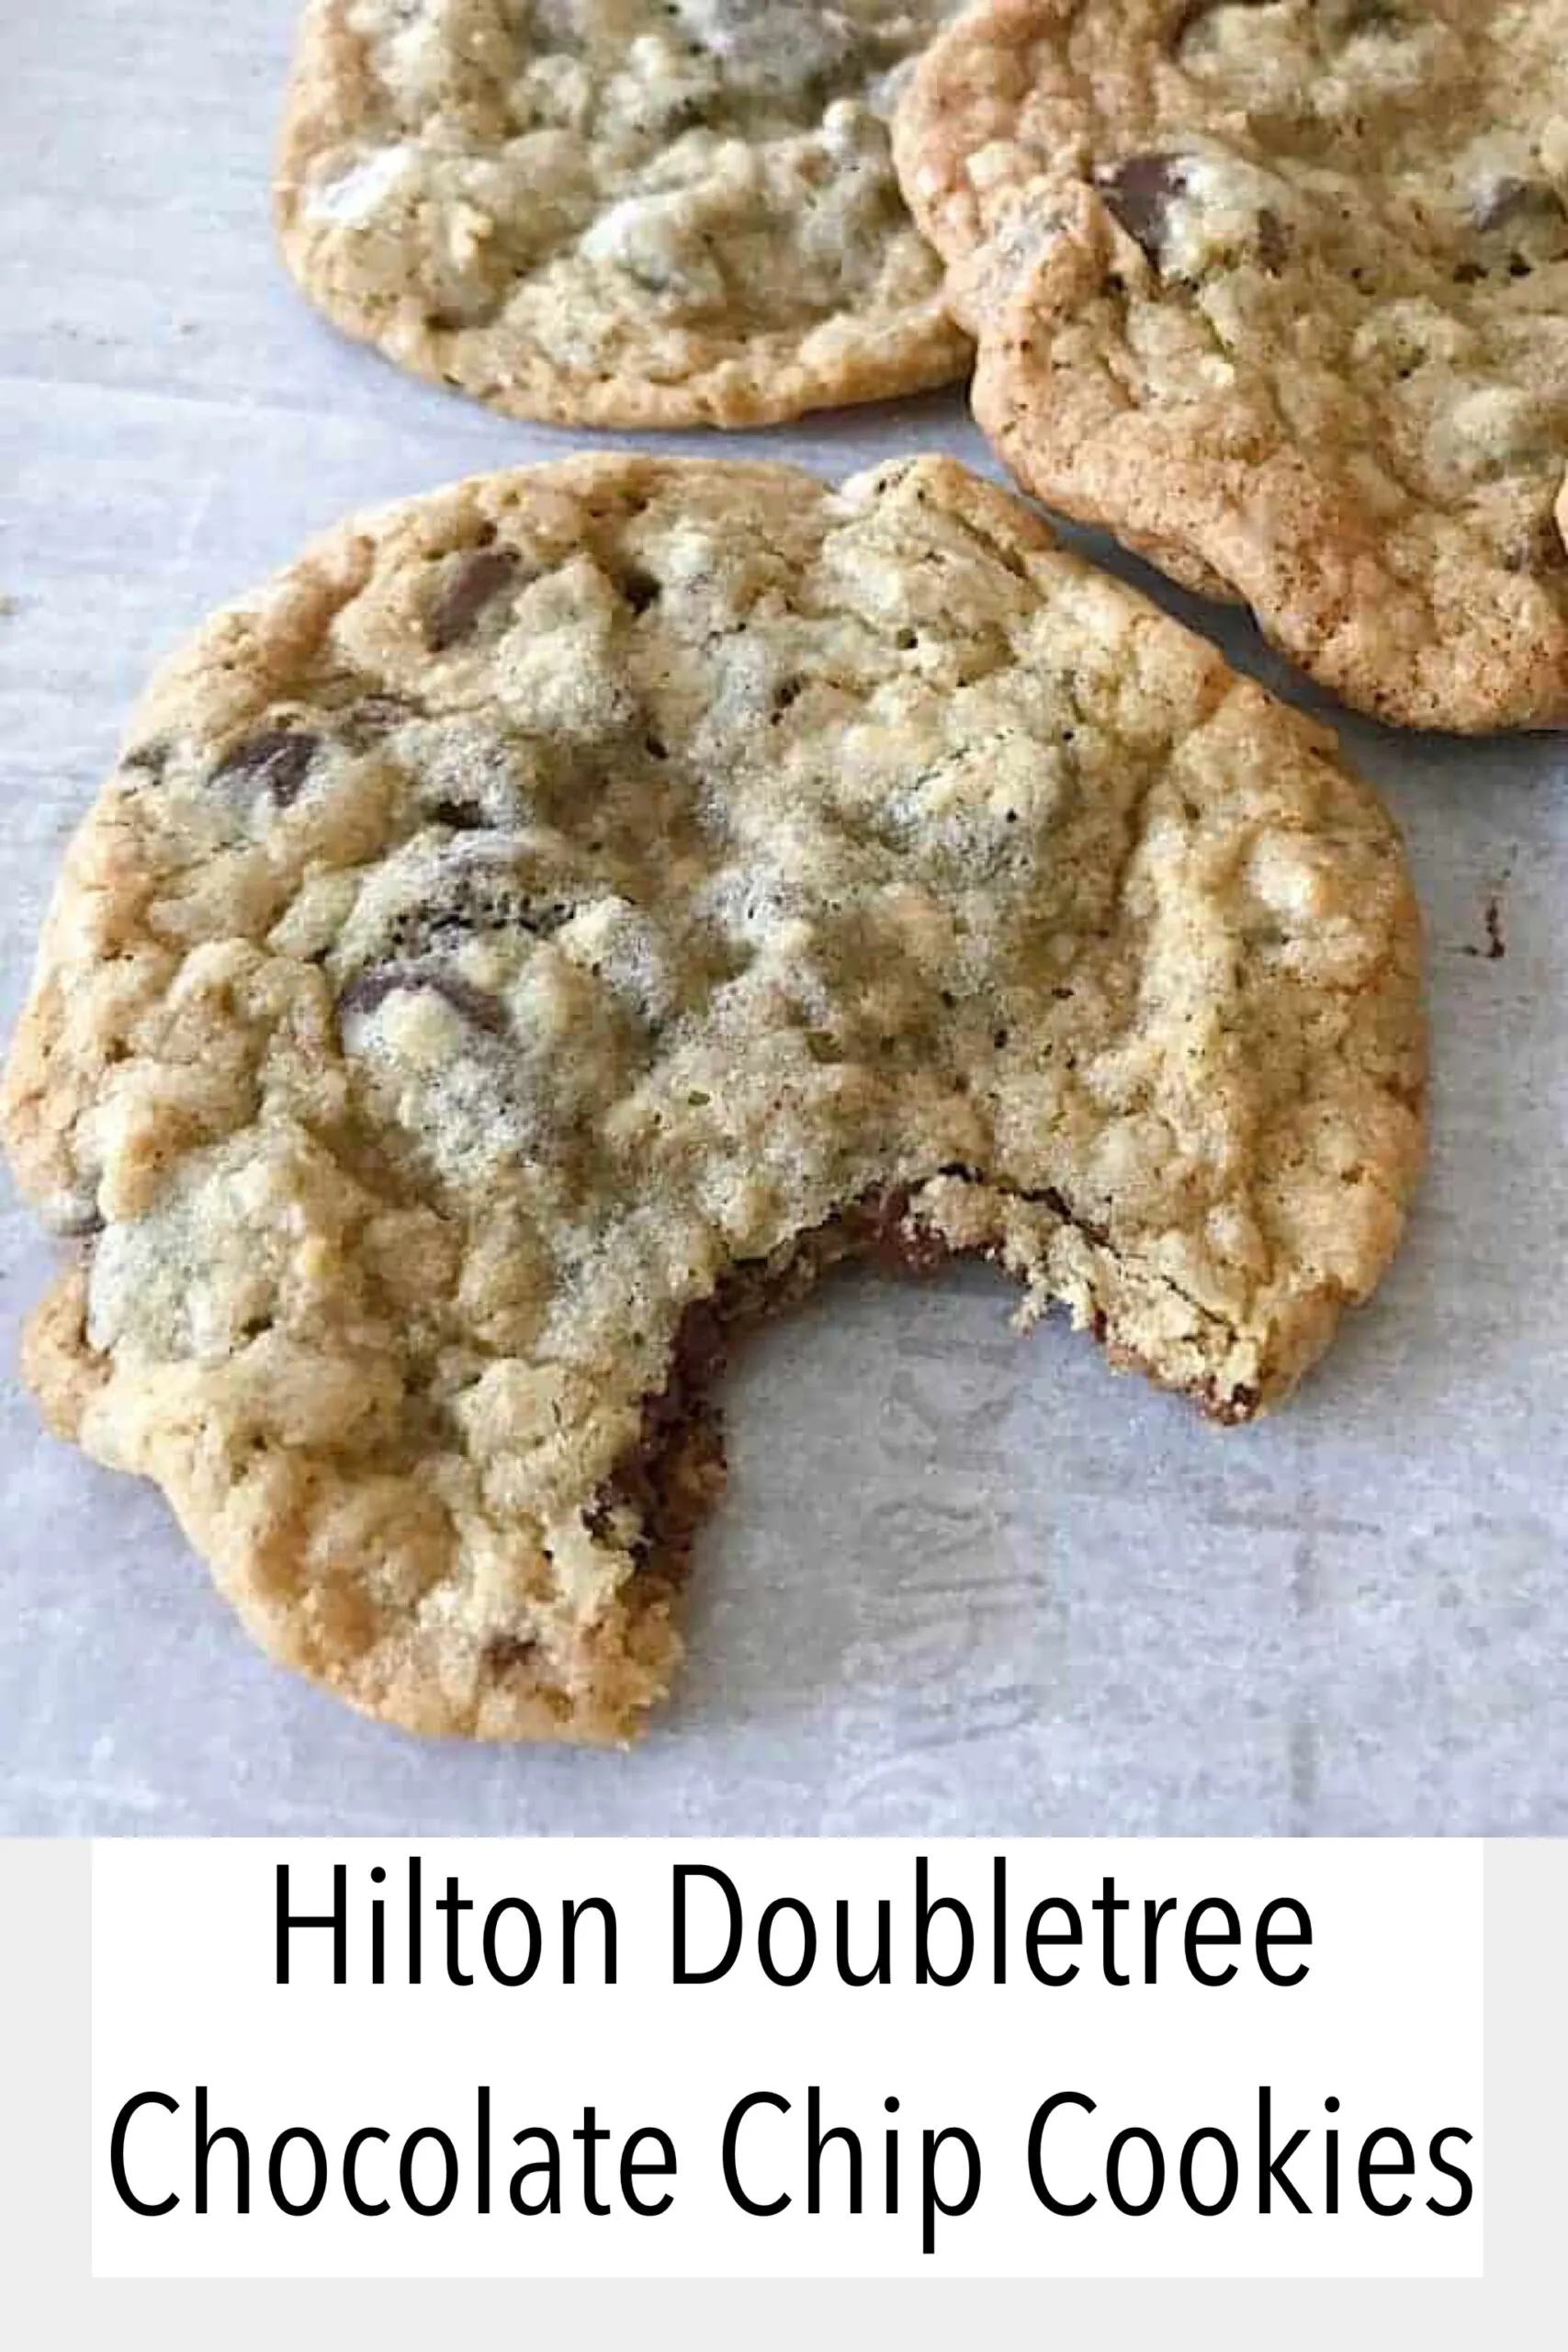 Hilton Doubletree Chocolate Chip Cookies